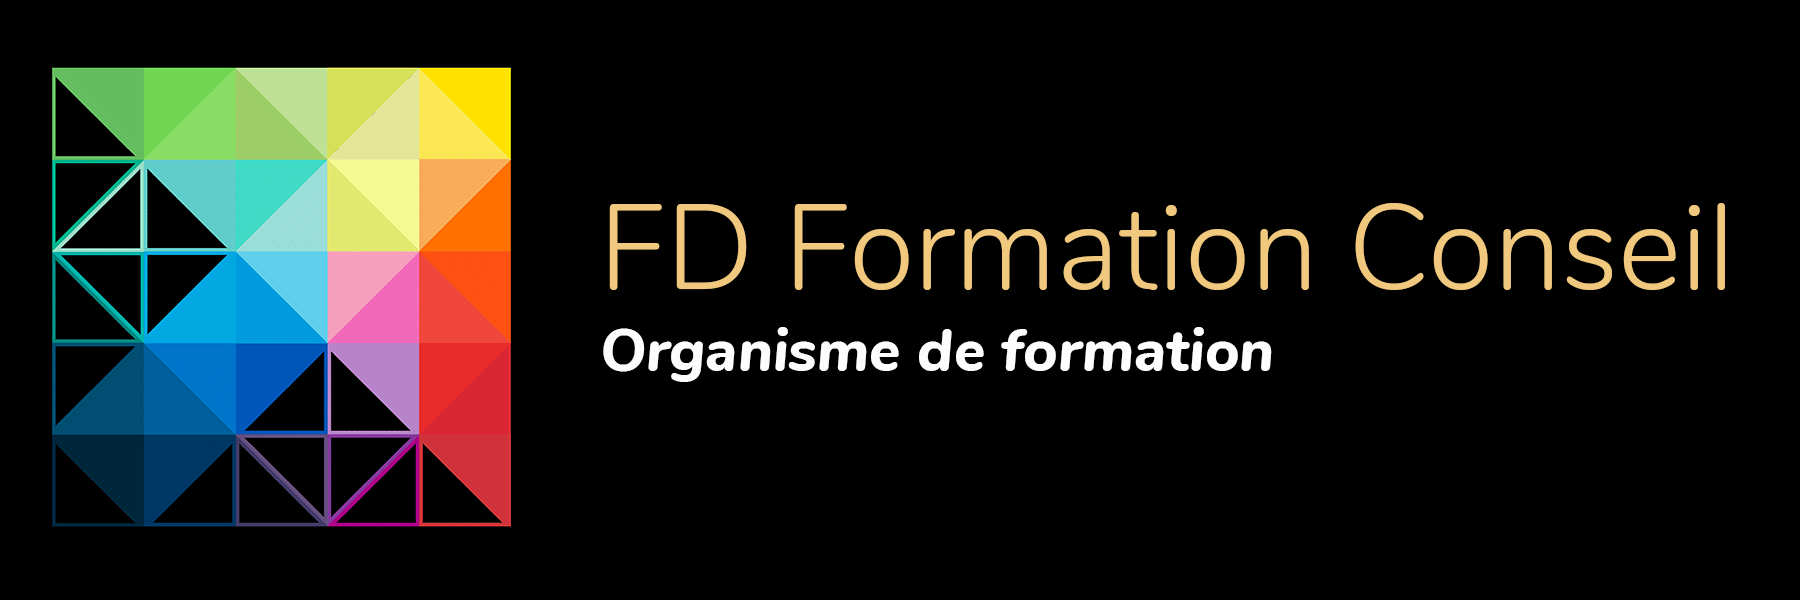 FD Formation Conseil